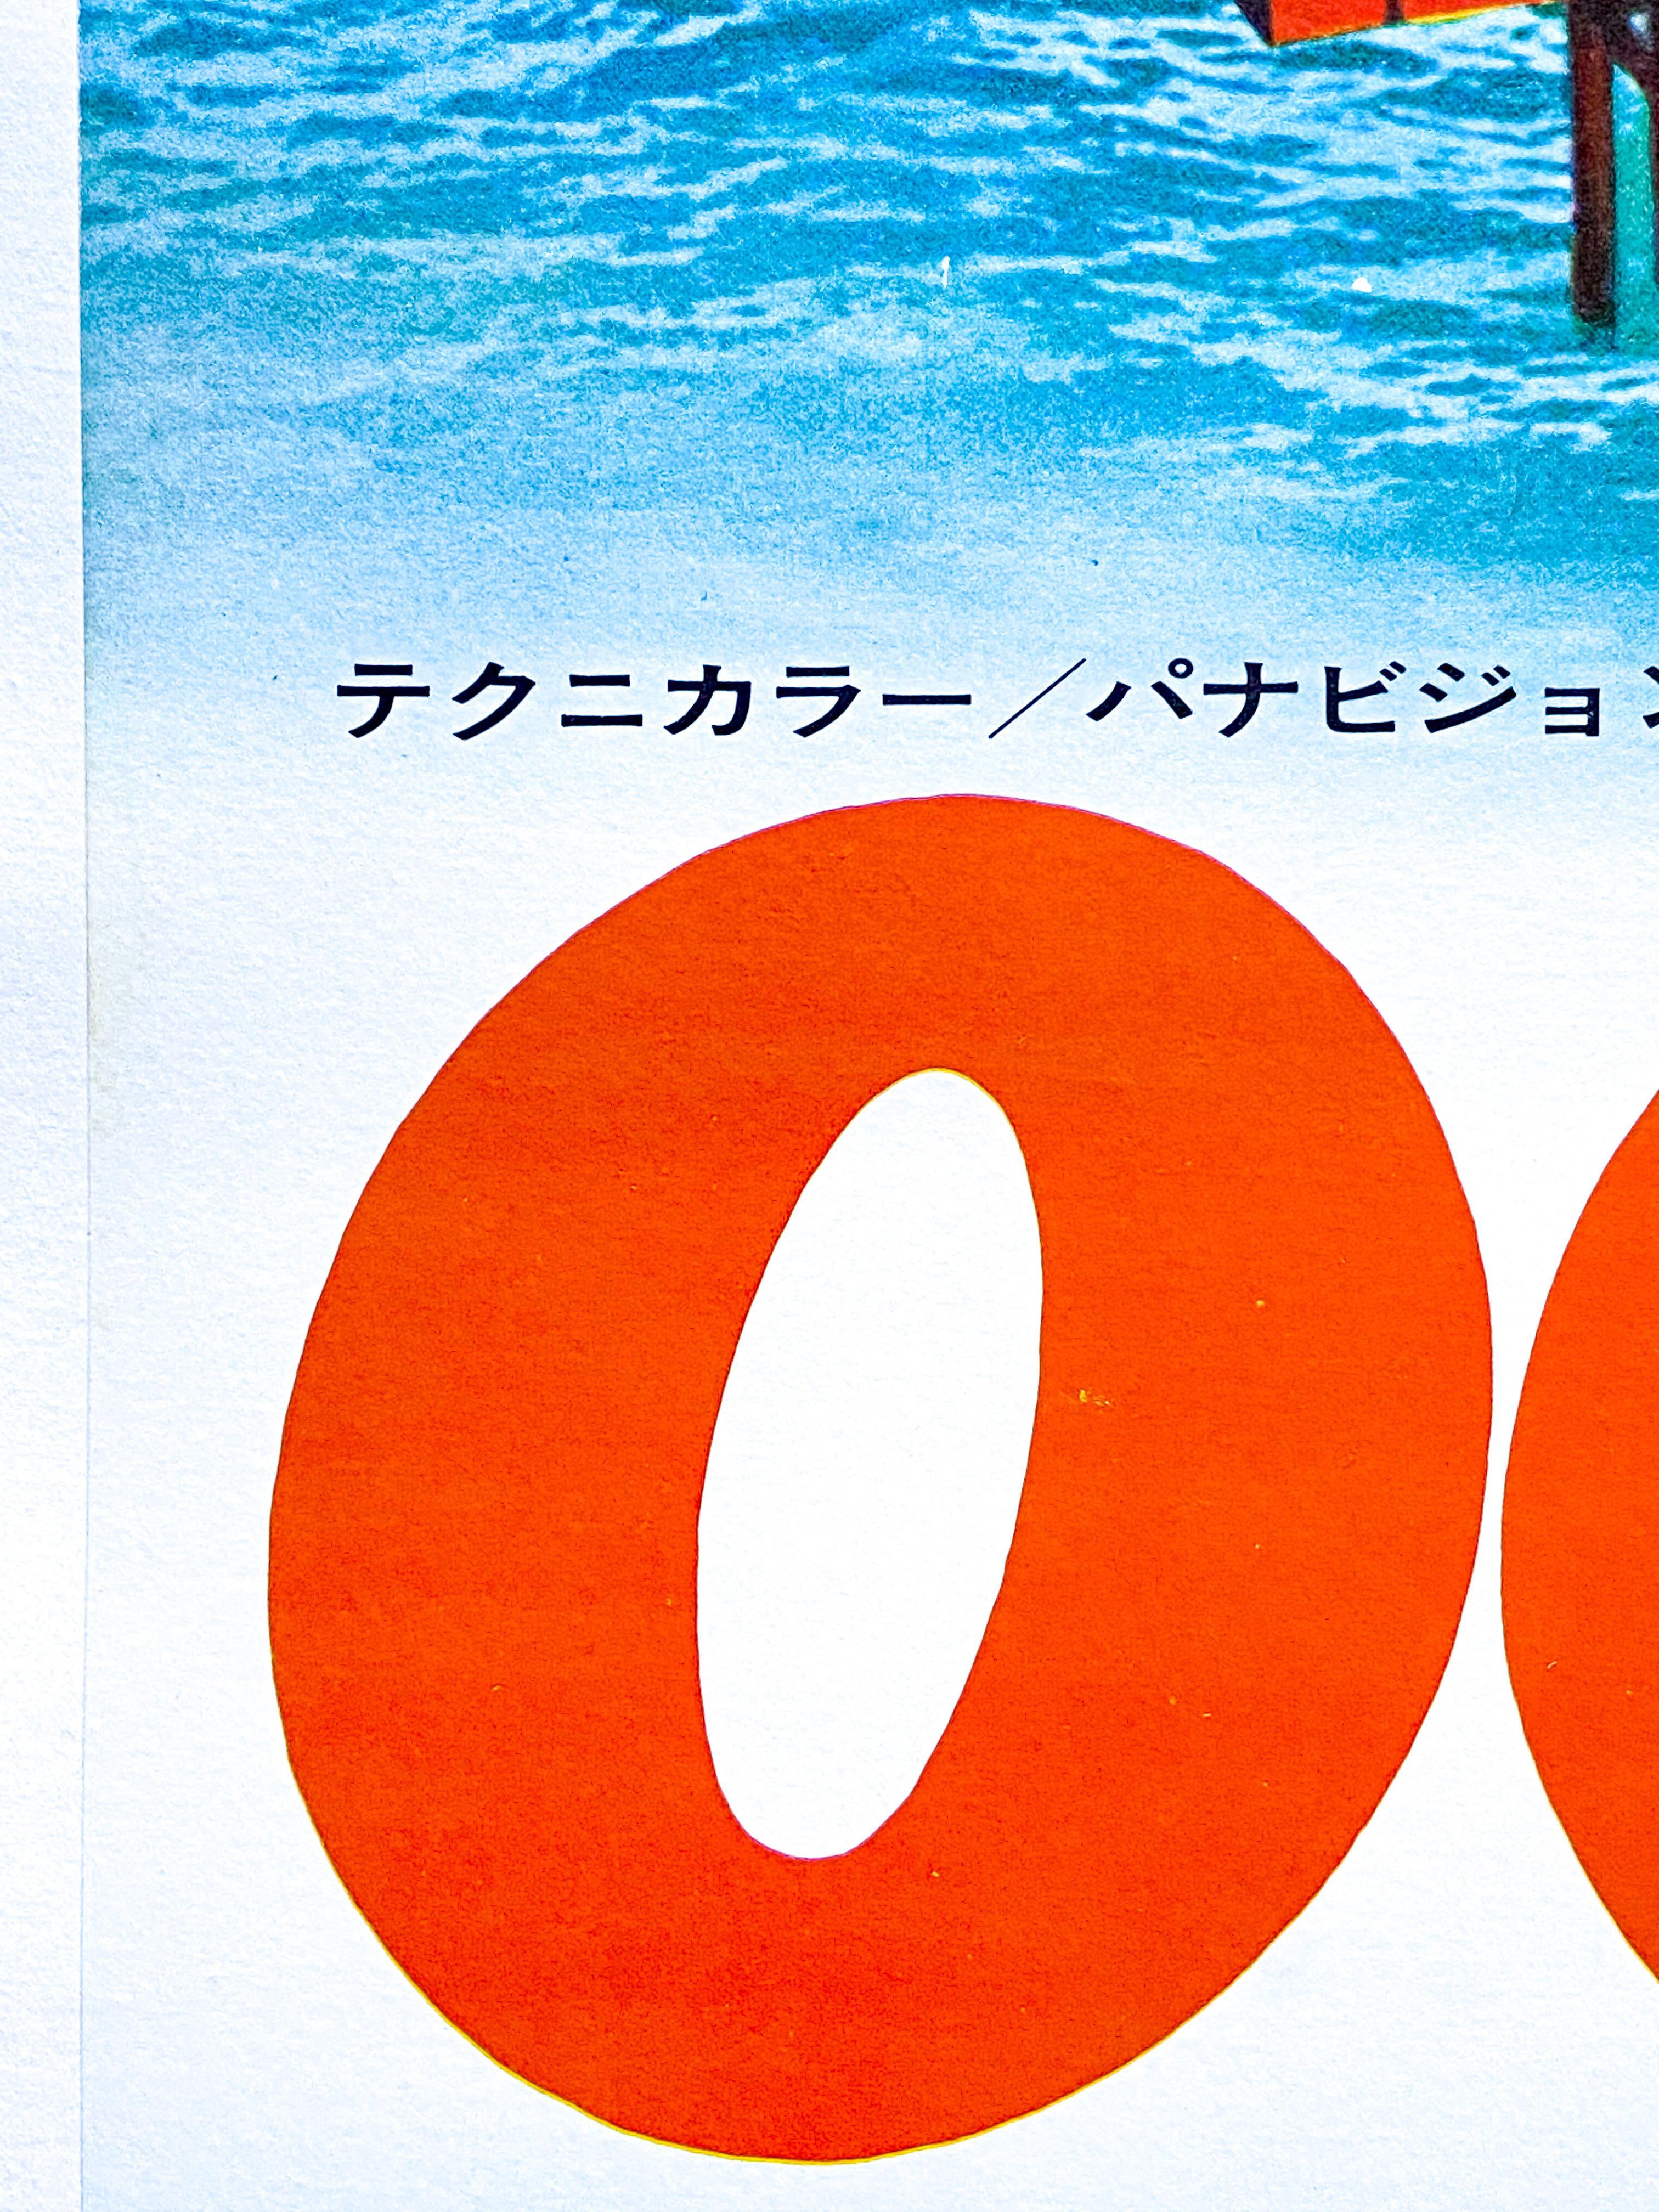 James Bond 'Diamonds Are Forever' Original Vintage Japanese Movie Poster, 1971 For Sale 8